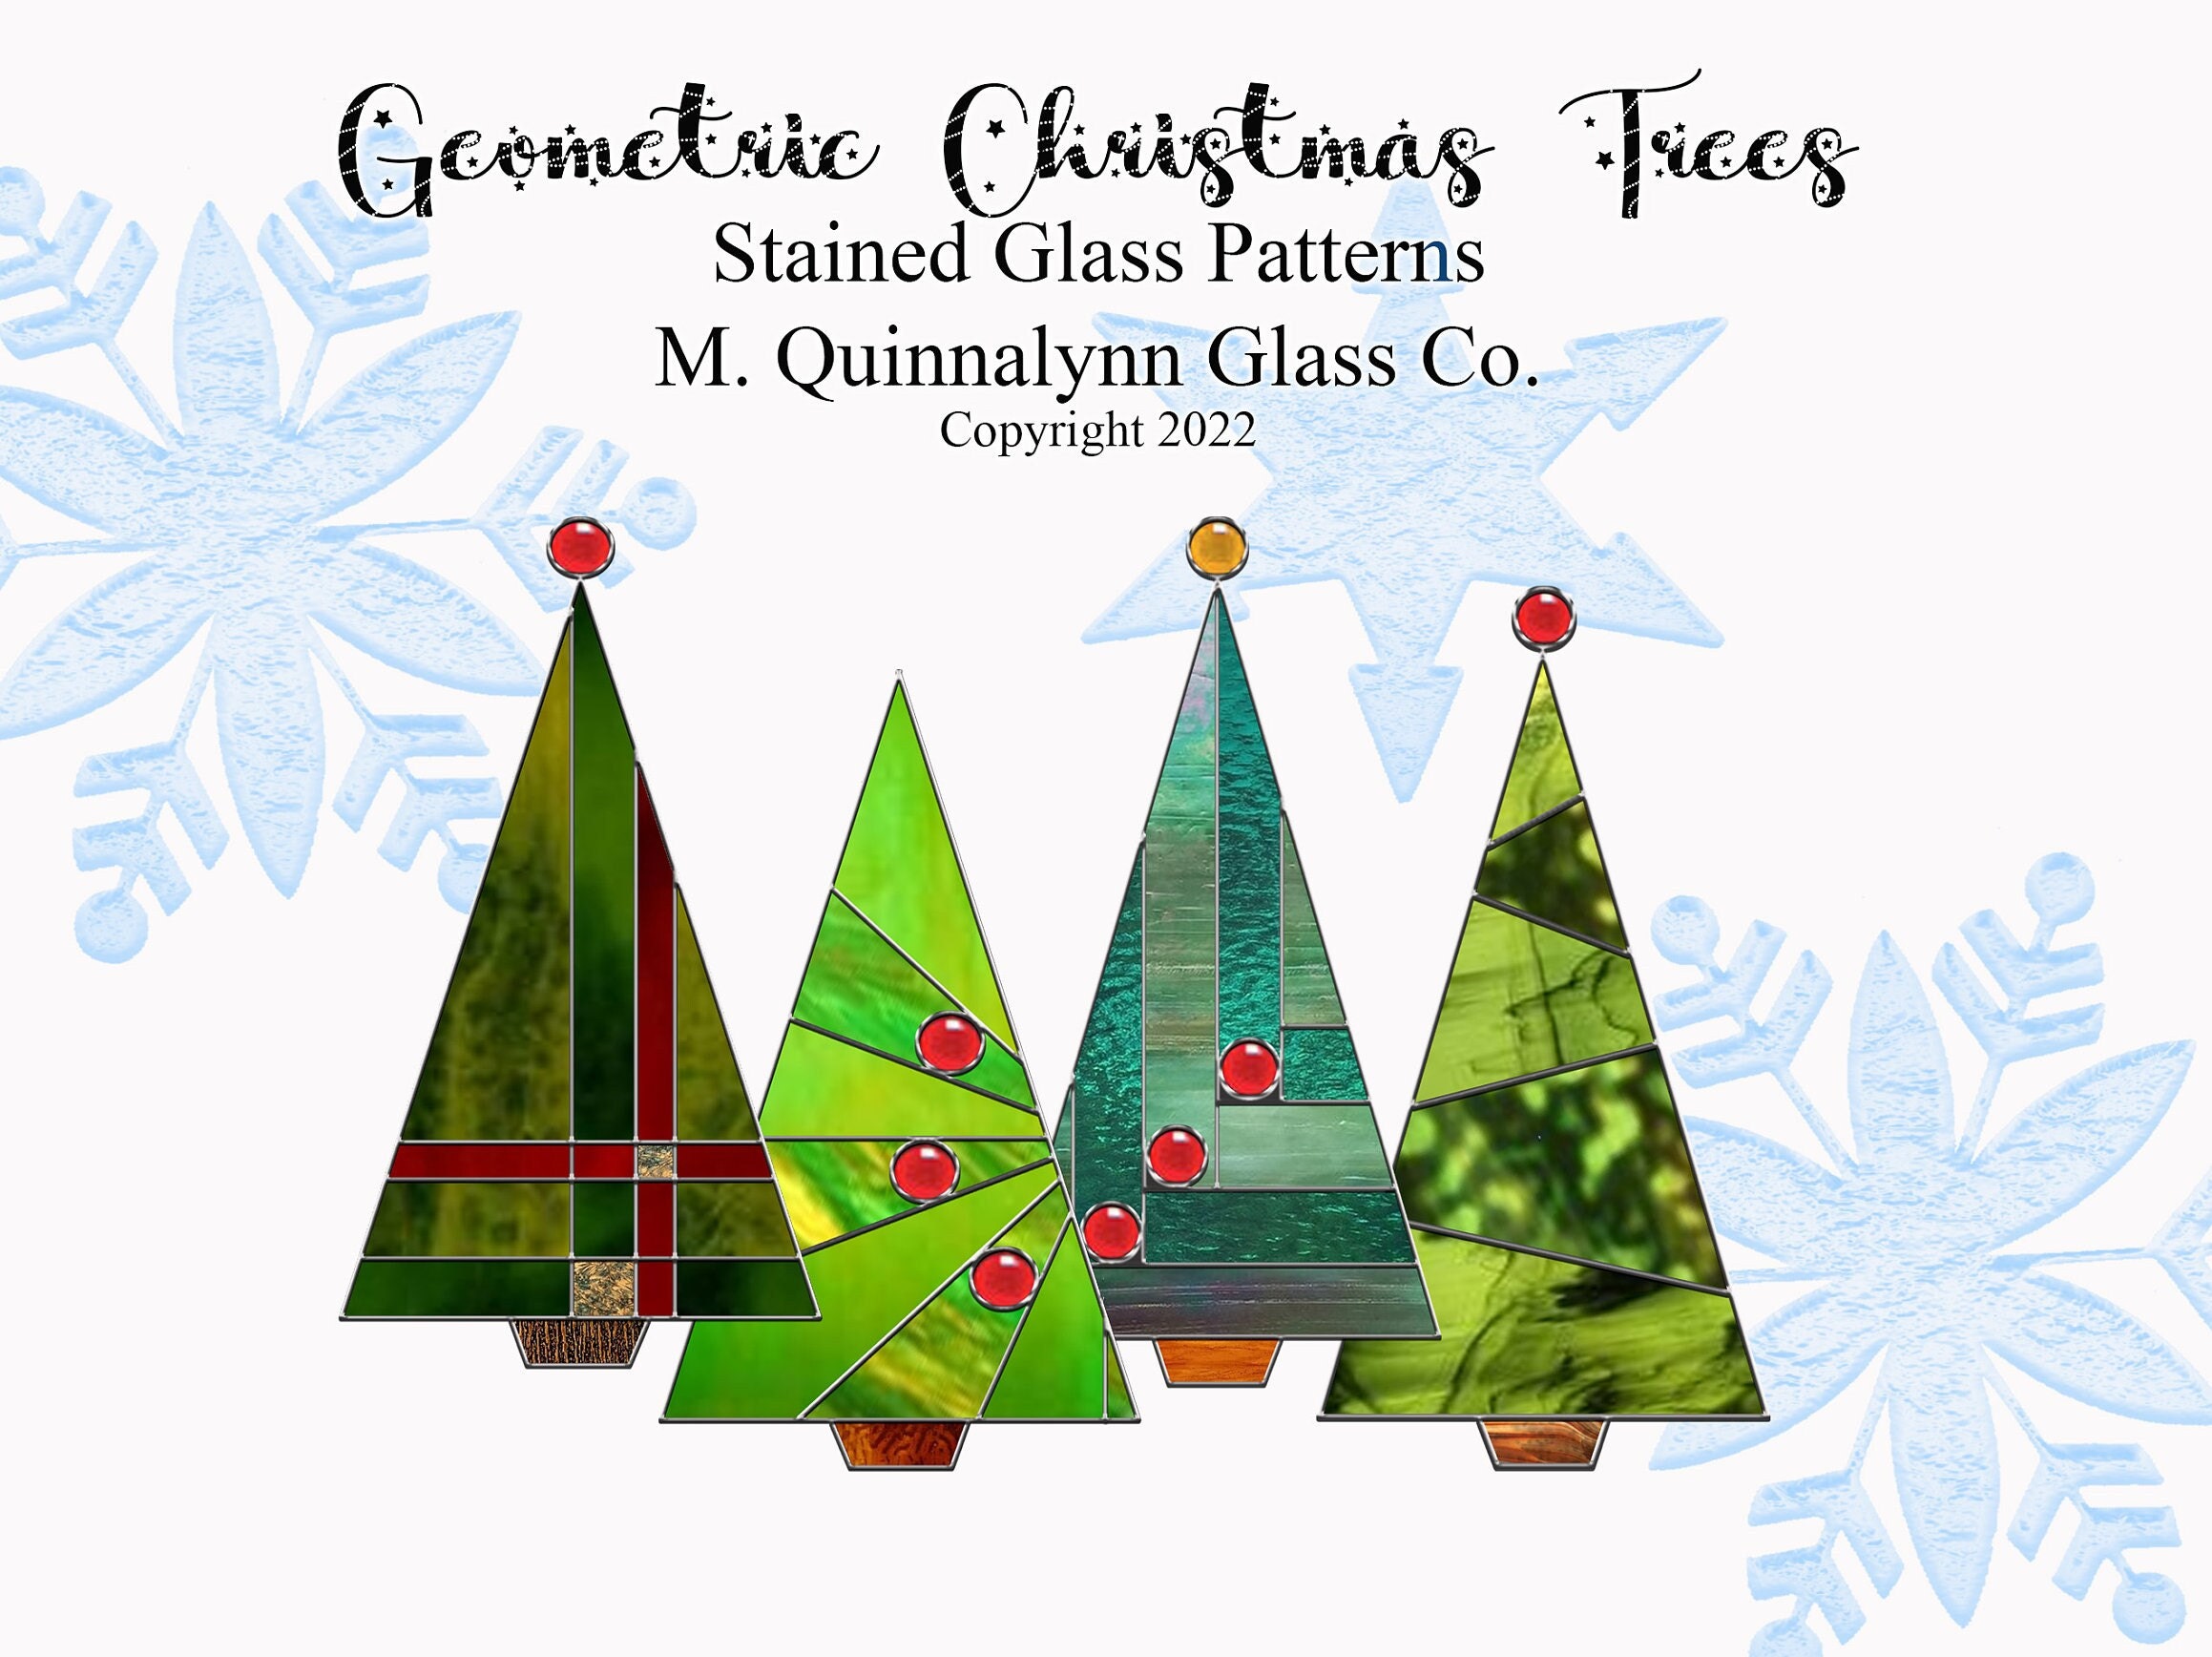 Geometric Christmas Trees Stained Glass Patterns Suncatcher Etsy Uk